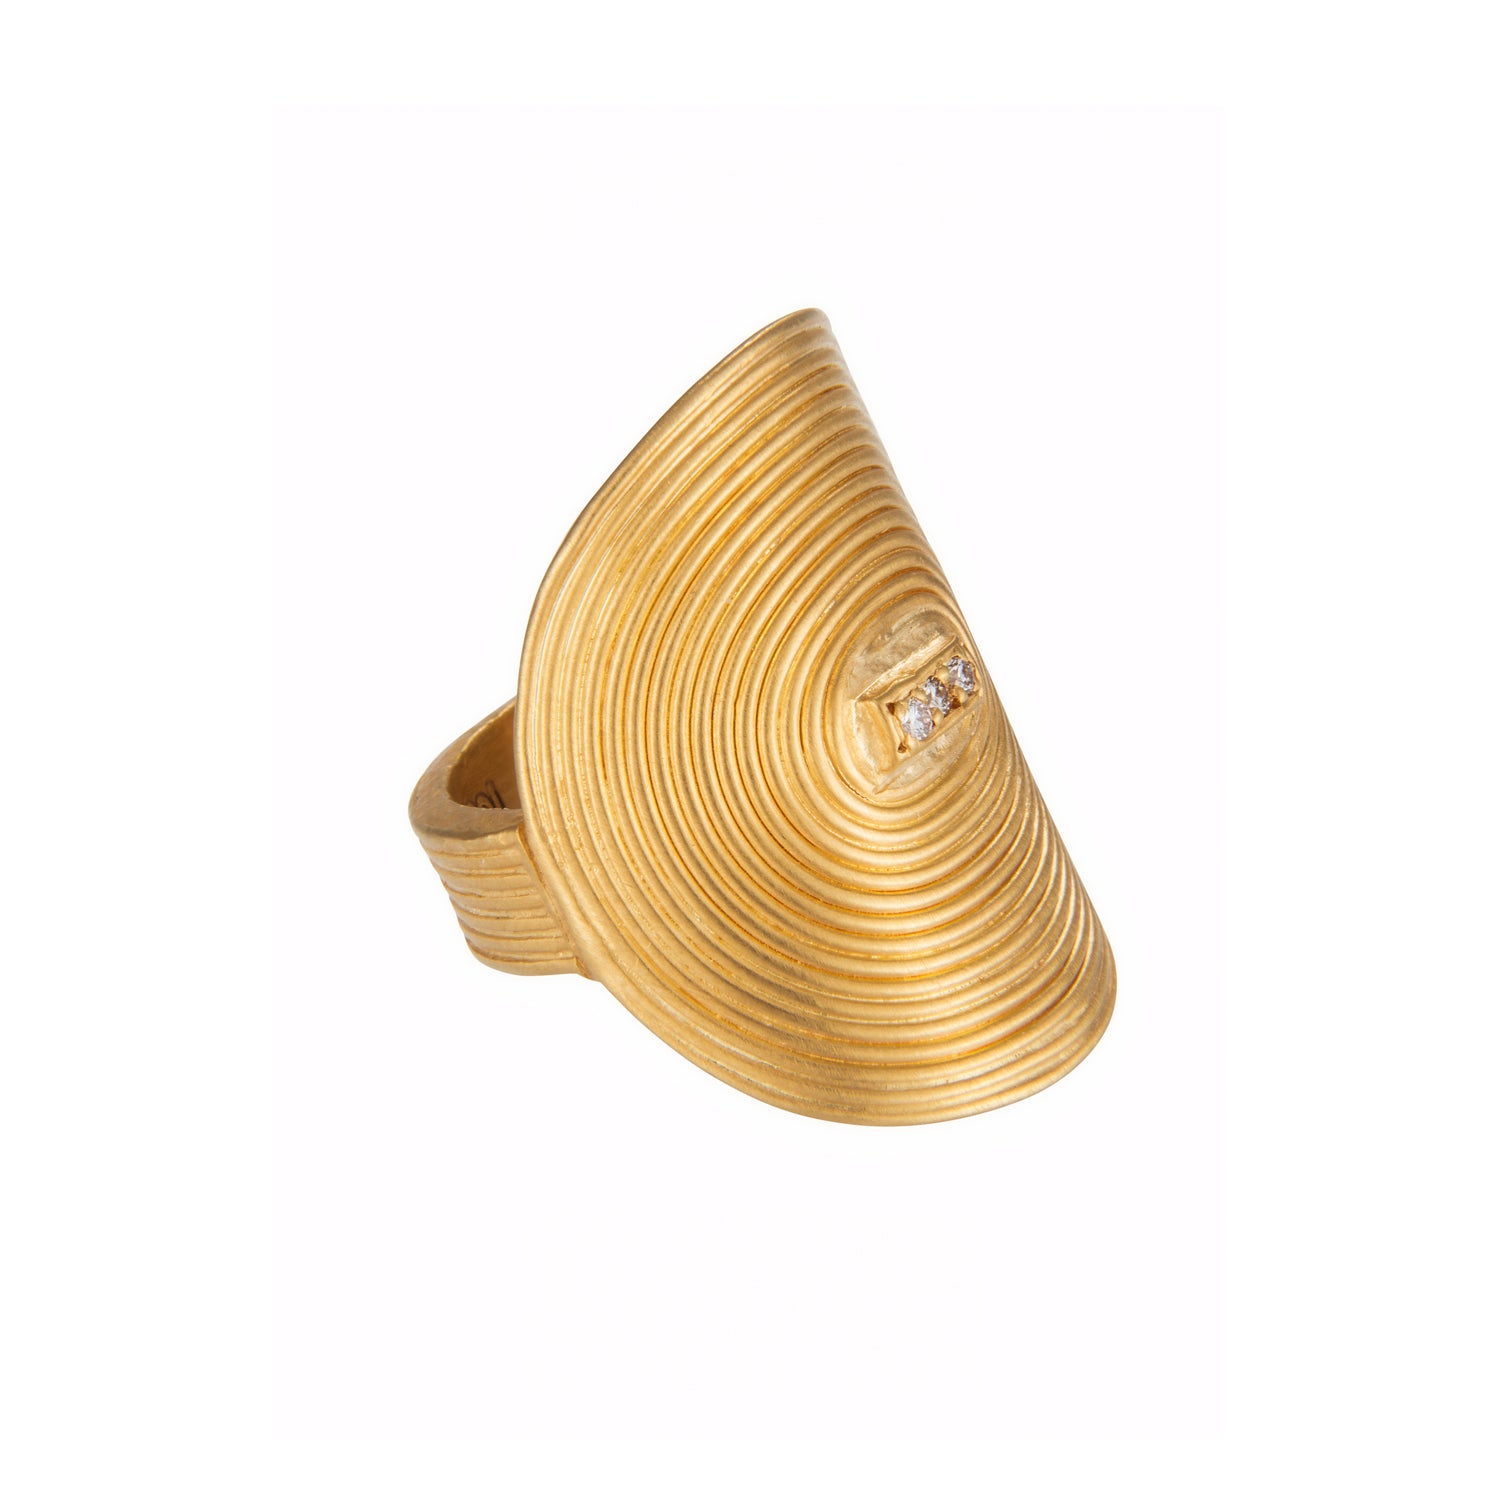 24k gold Vinyl band ring – Yossi Harari